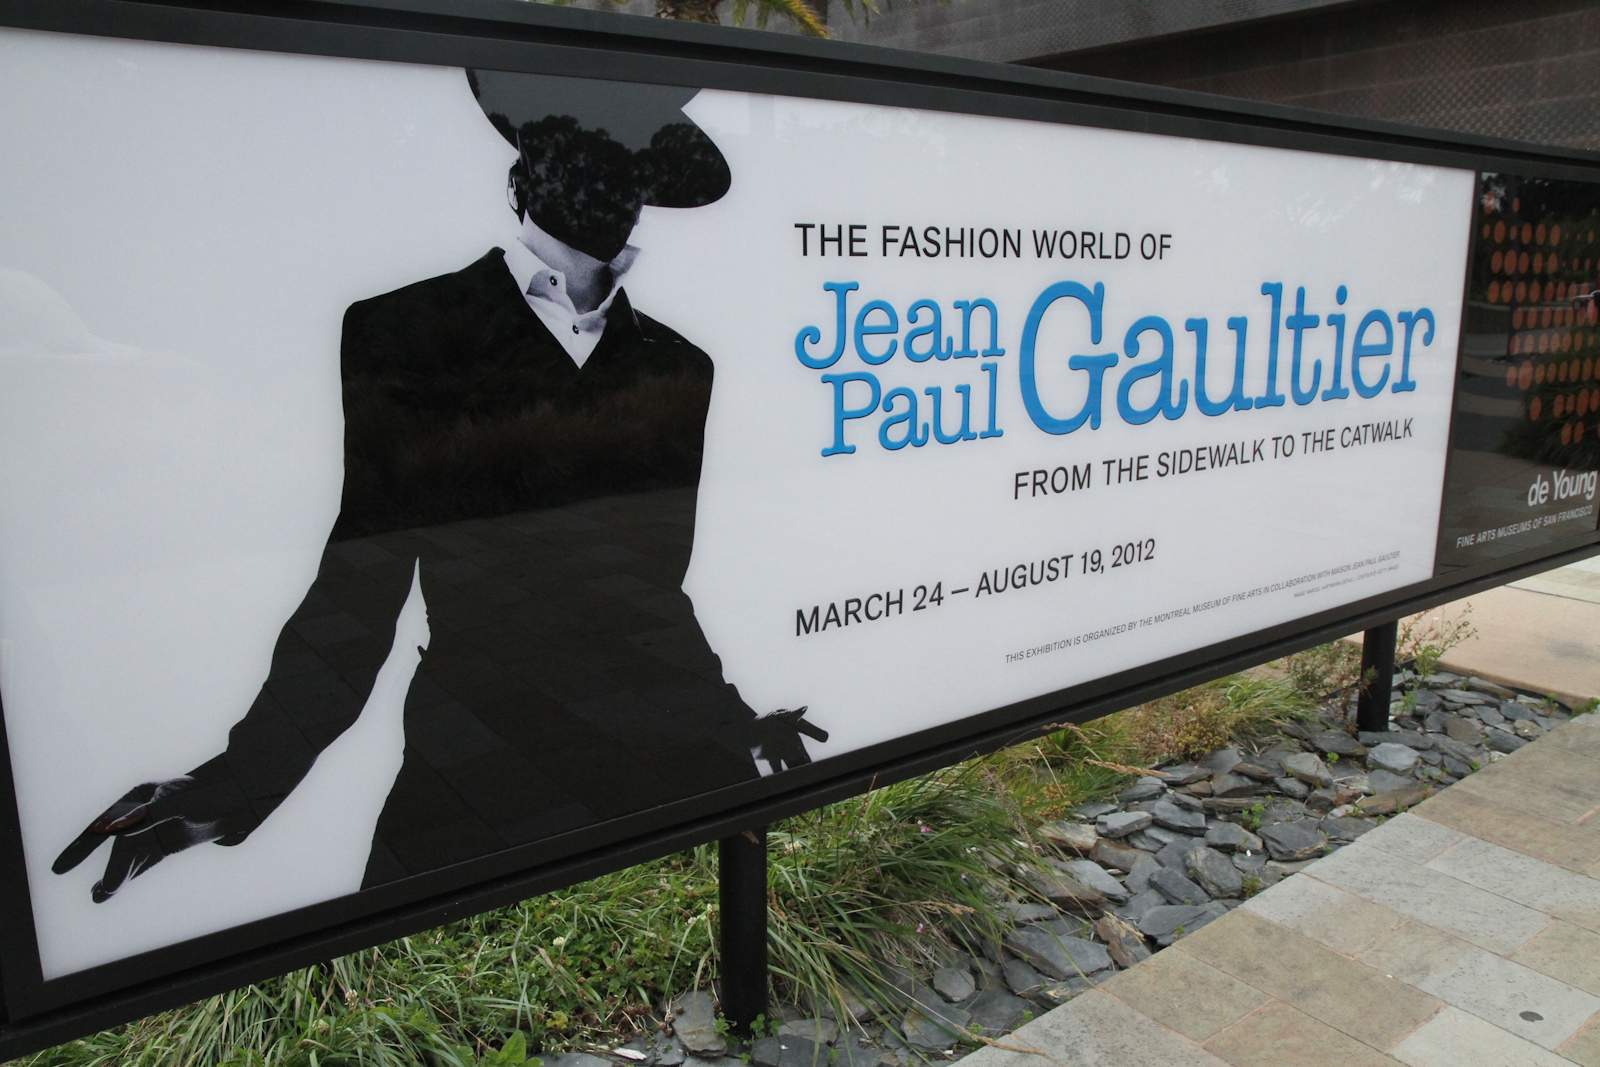 Gaultier on Display